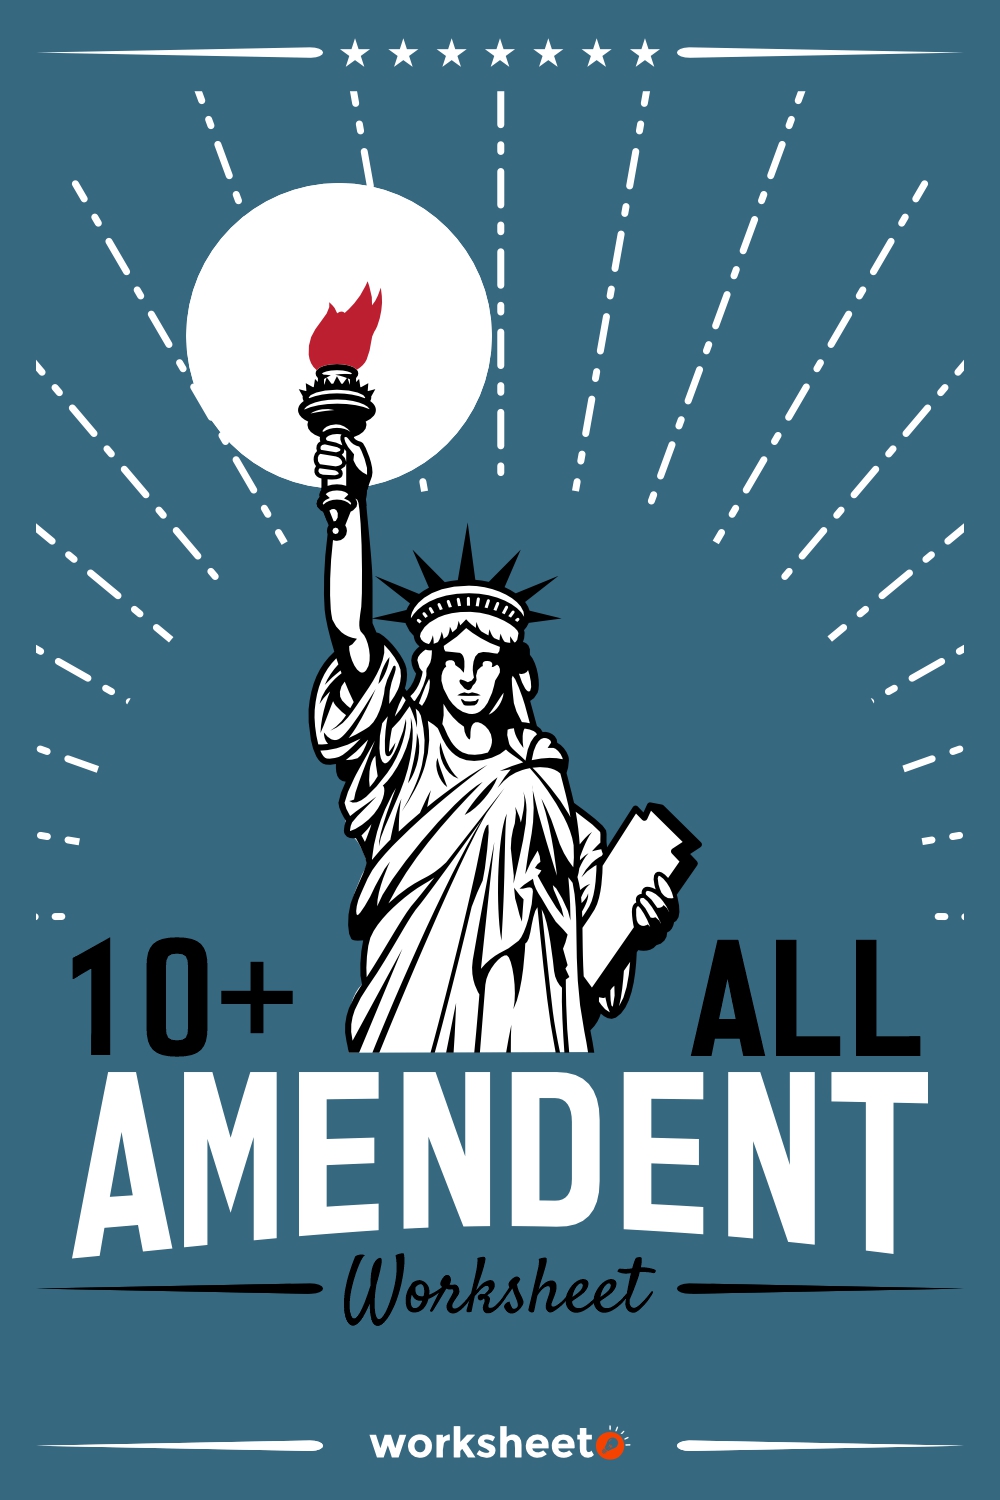 19 Images of All Amendment Worksheet